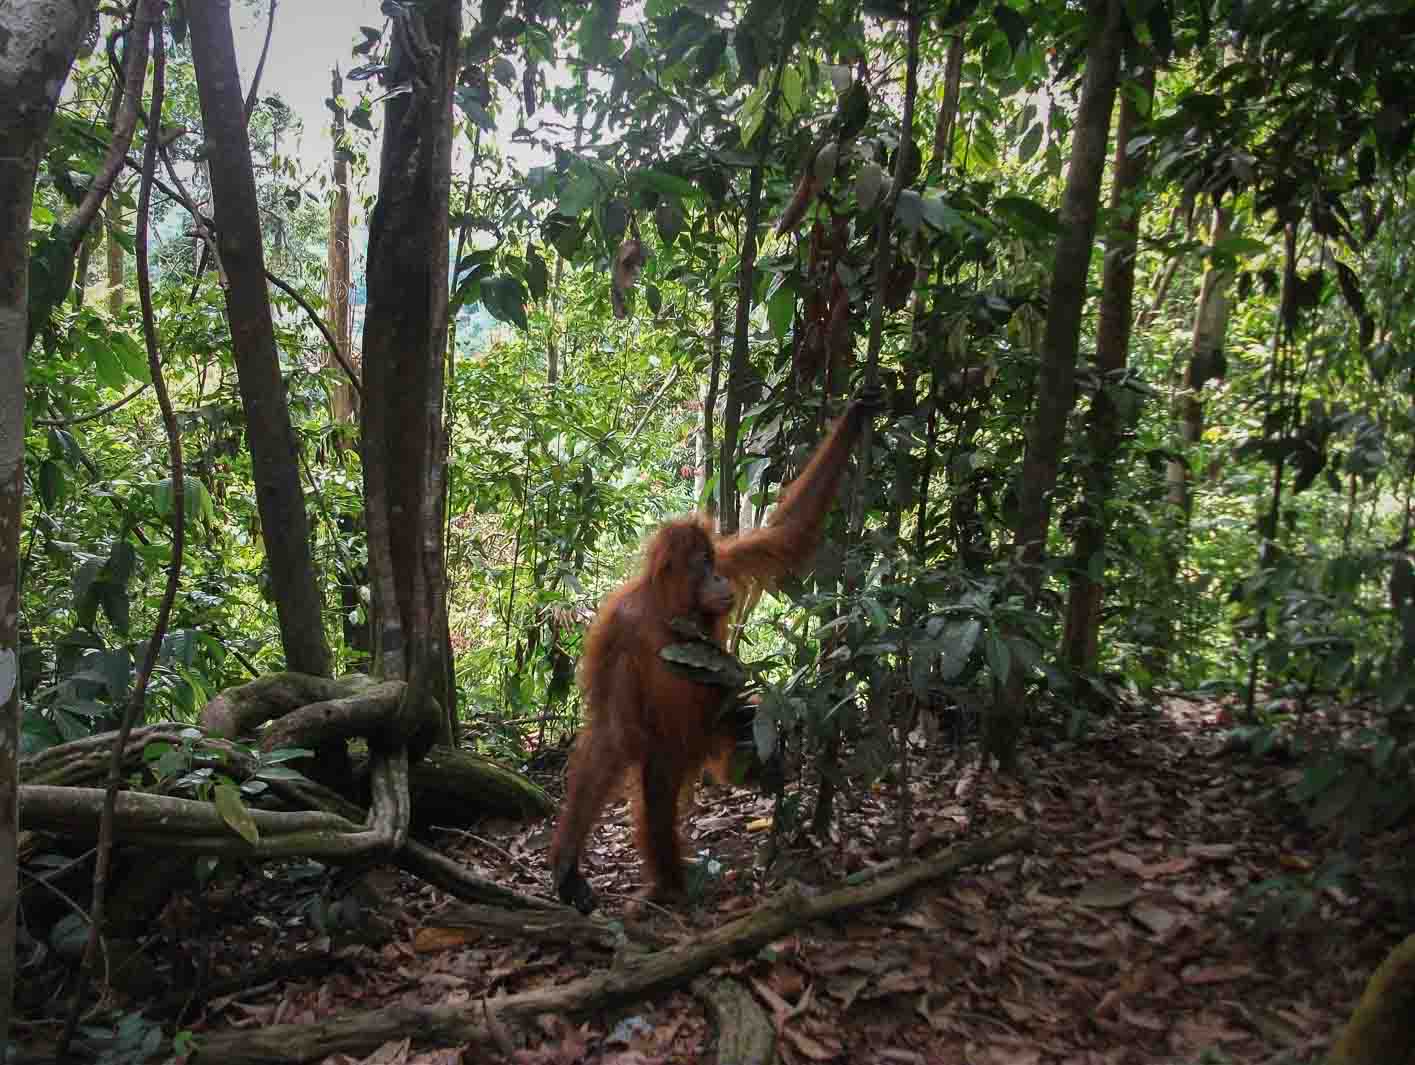 Orangután caminando en la selva de Bukit Lawang en Sumatra